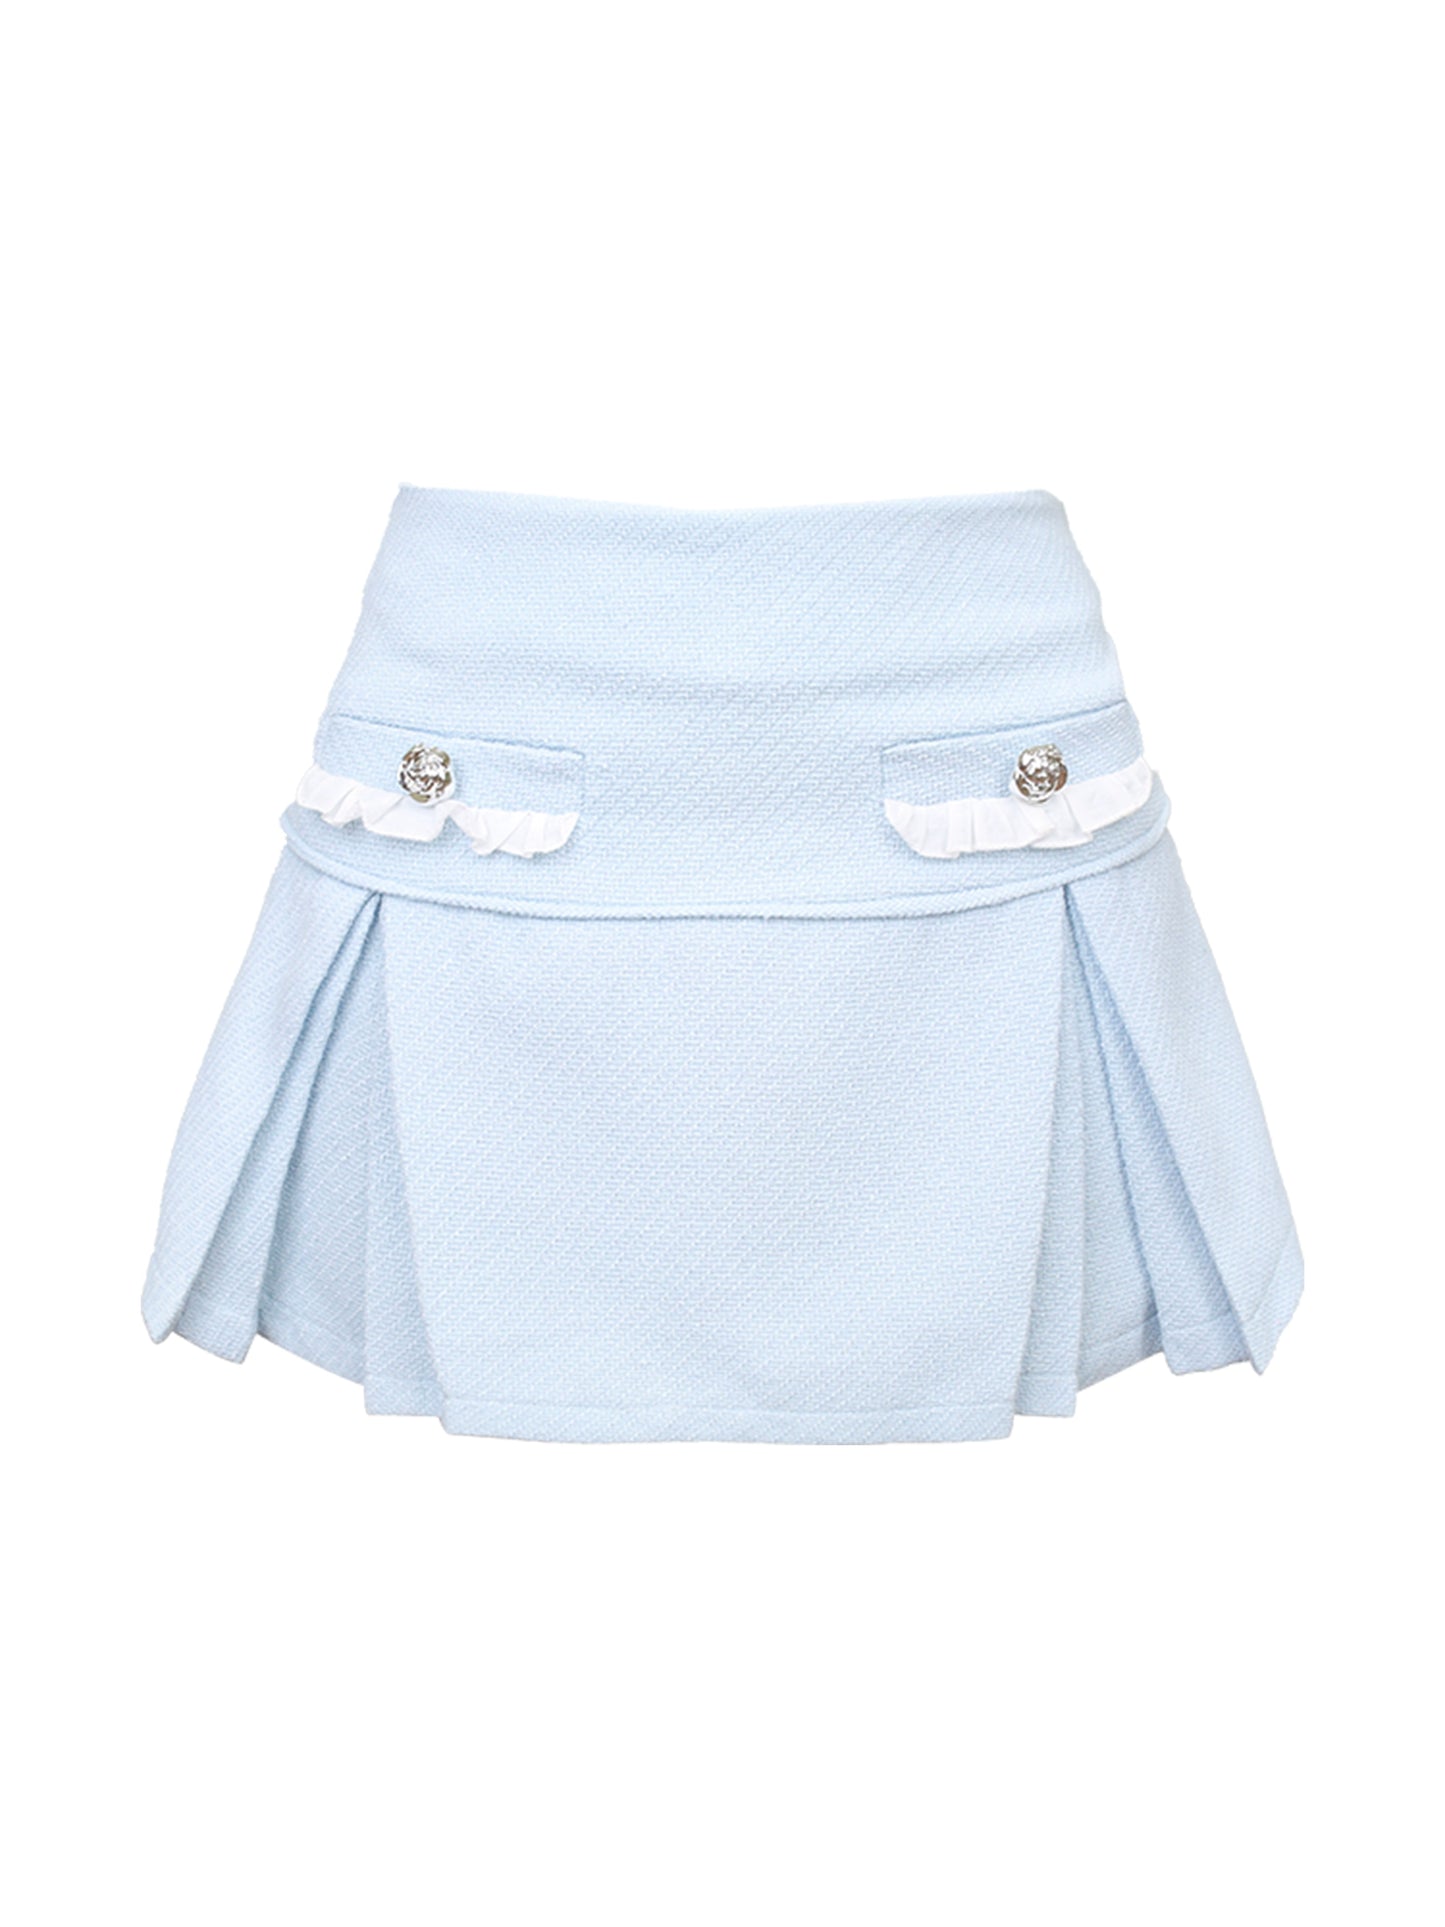 Ice Pear Mint Vest + Shirt + Double Skirt